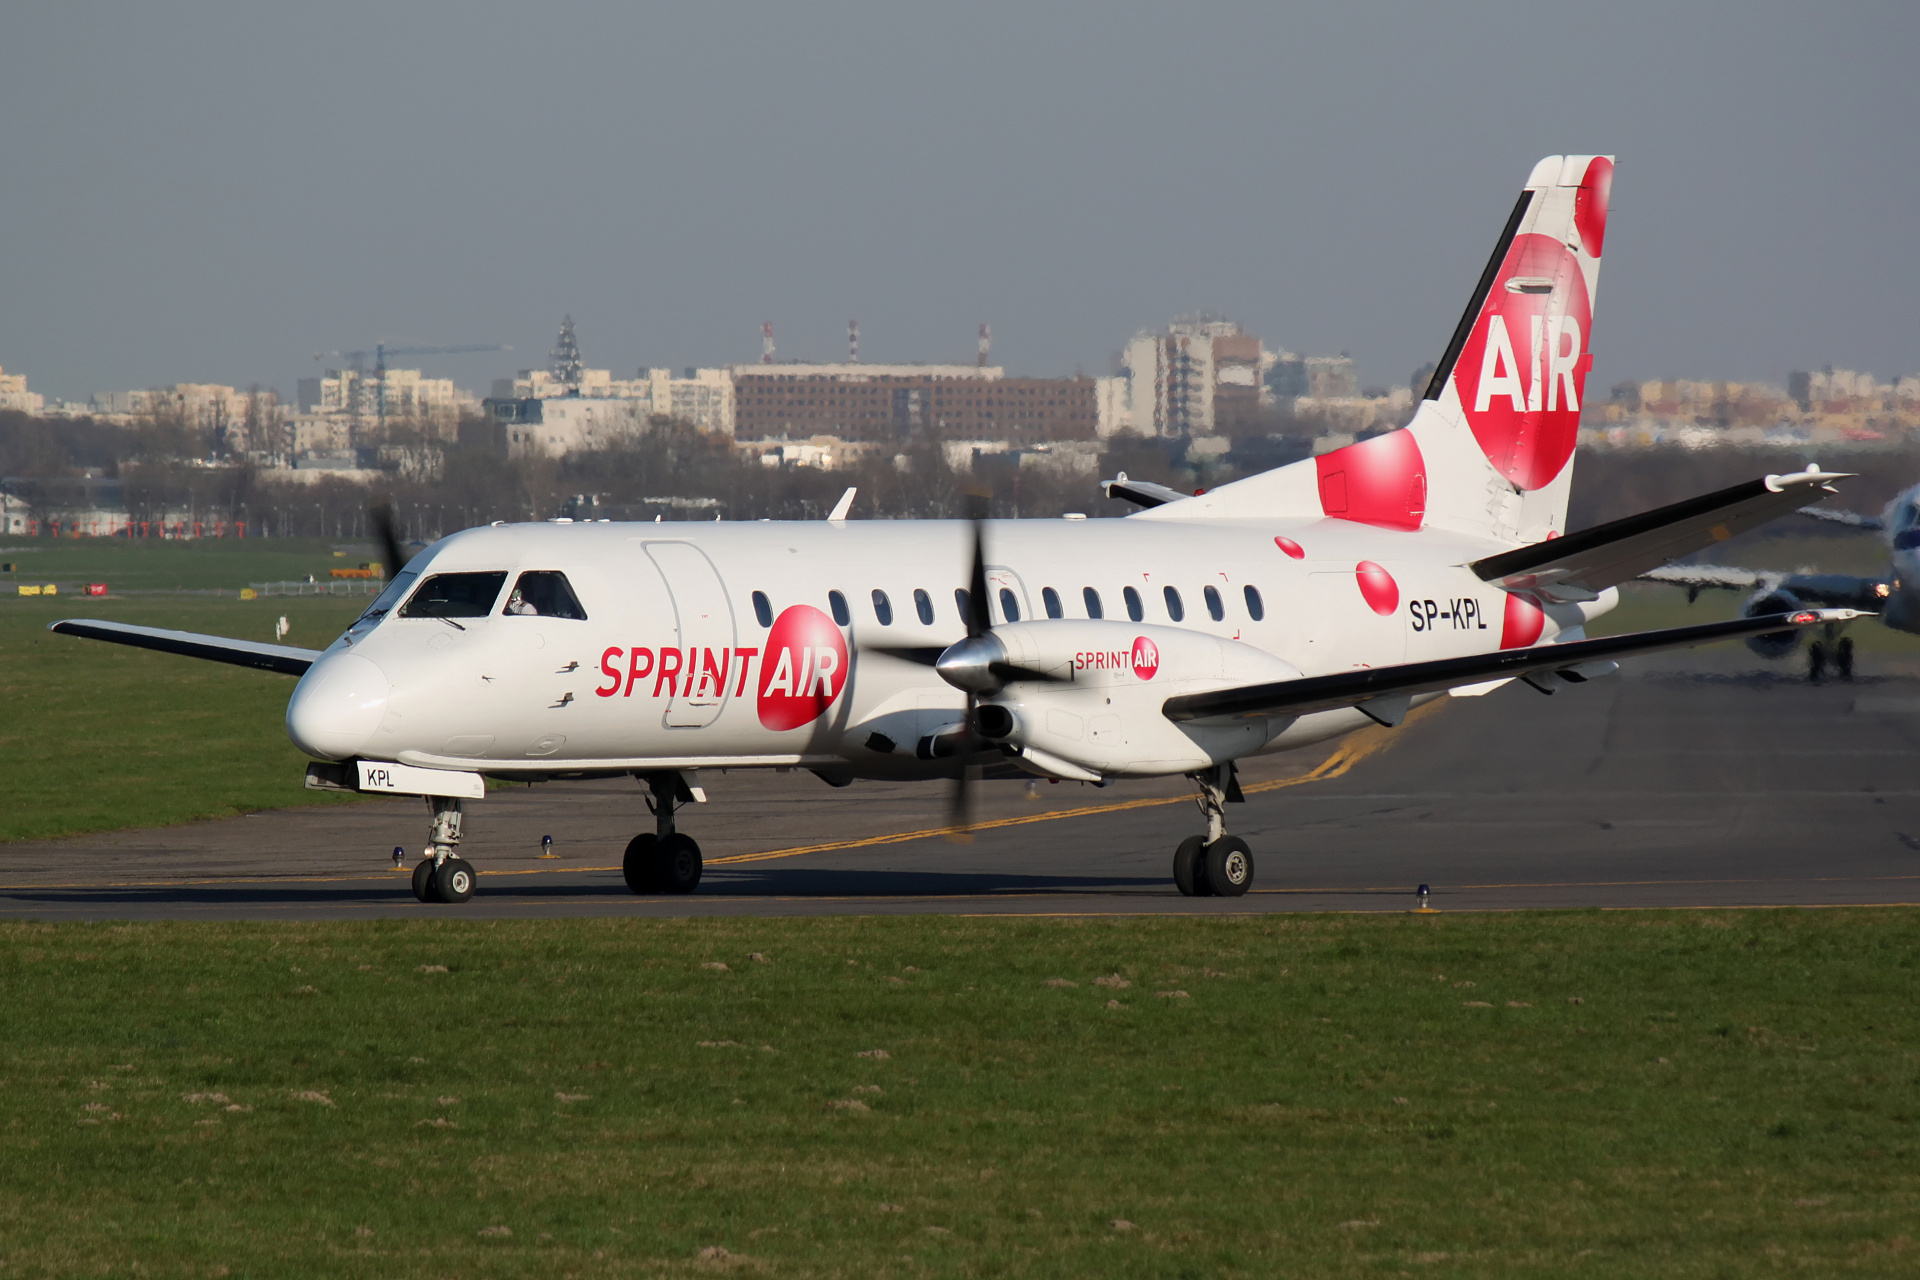 SP-KPL (Aircraft » EPWA Spotting » Saab 340 » 340A » SprintAir)